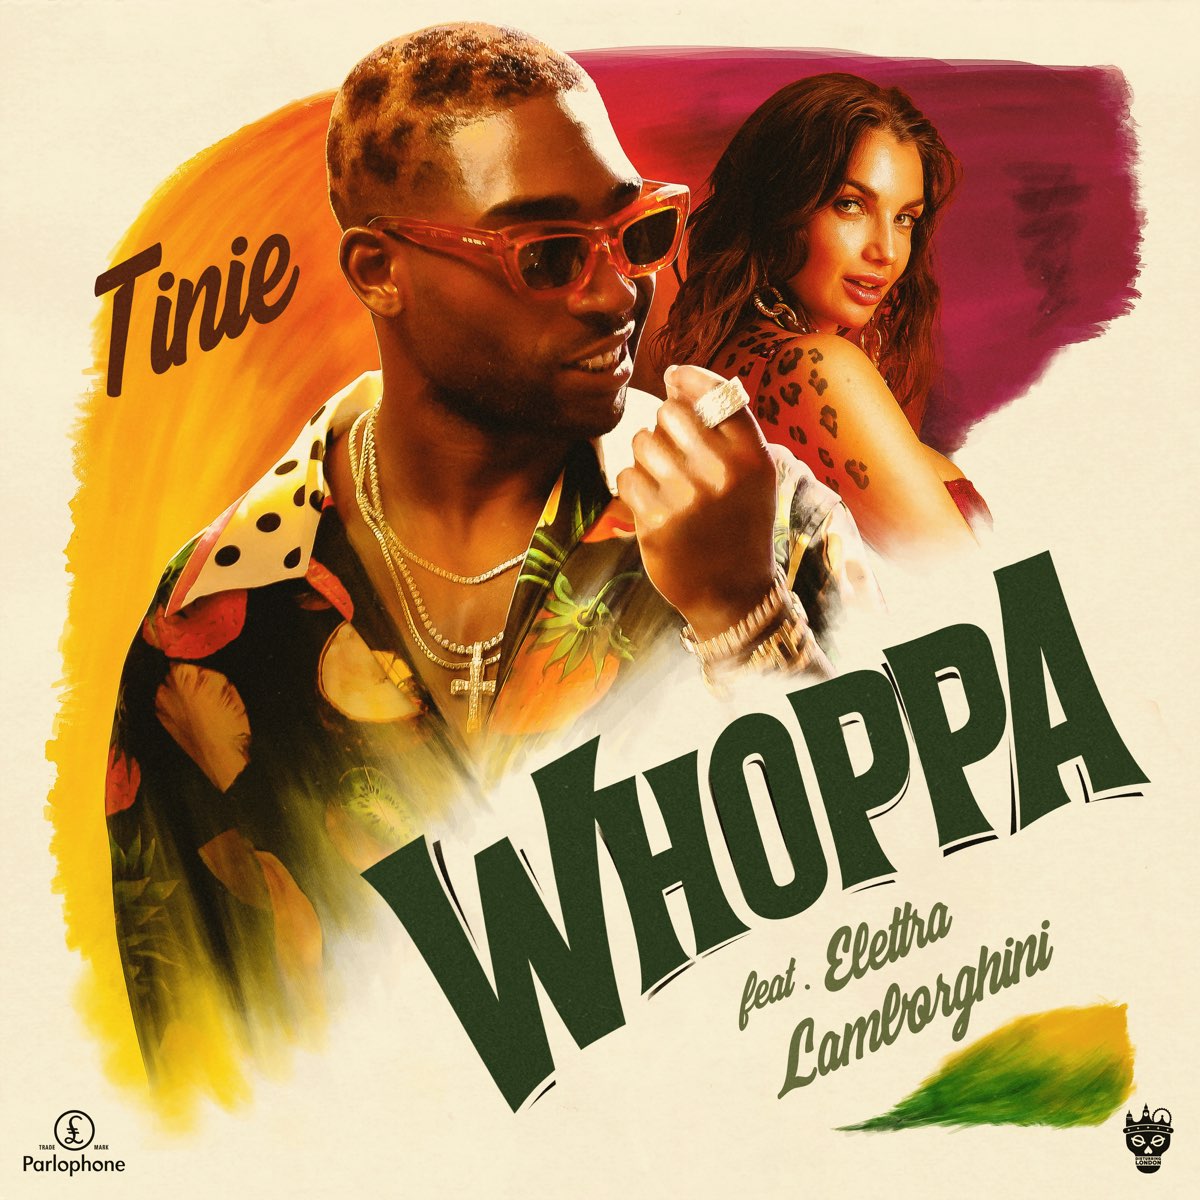 Tinie Tempah featuring Elettra Lamborghini — Whoppa cover artwork